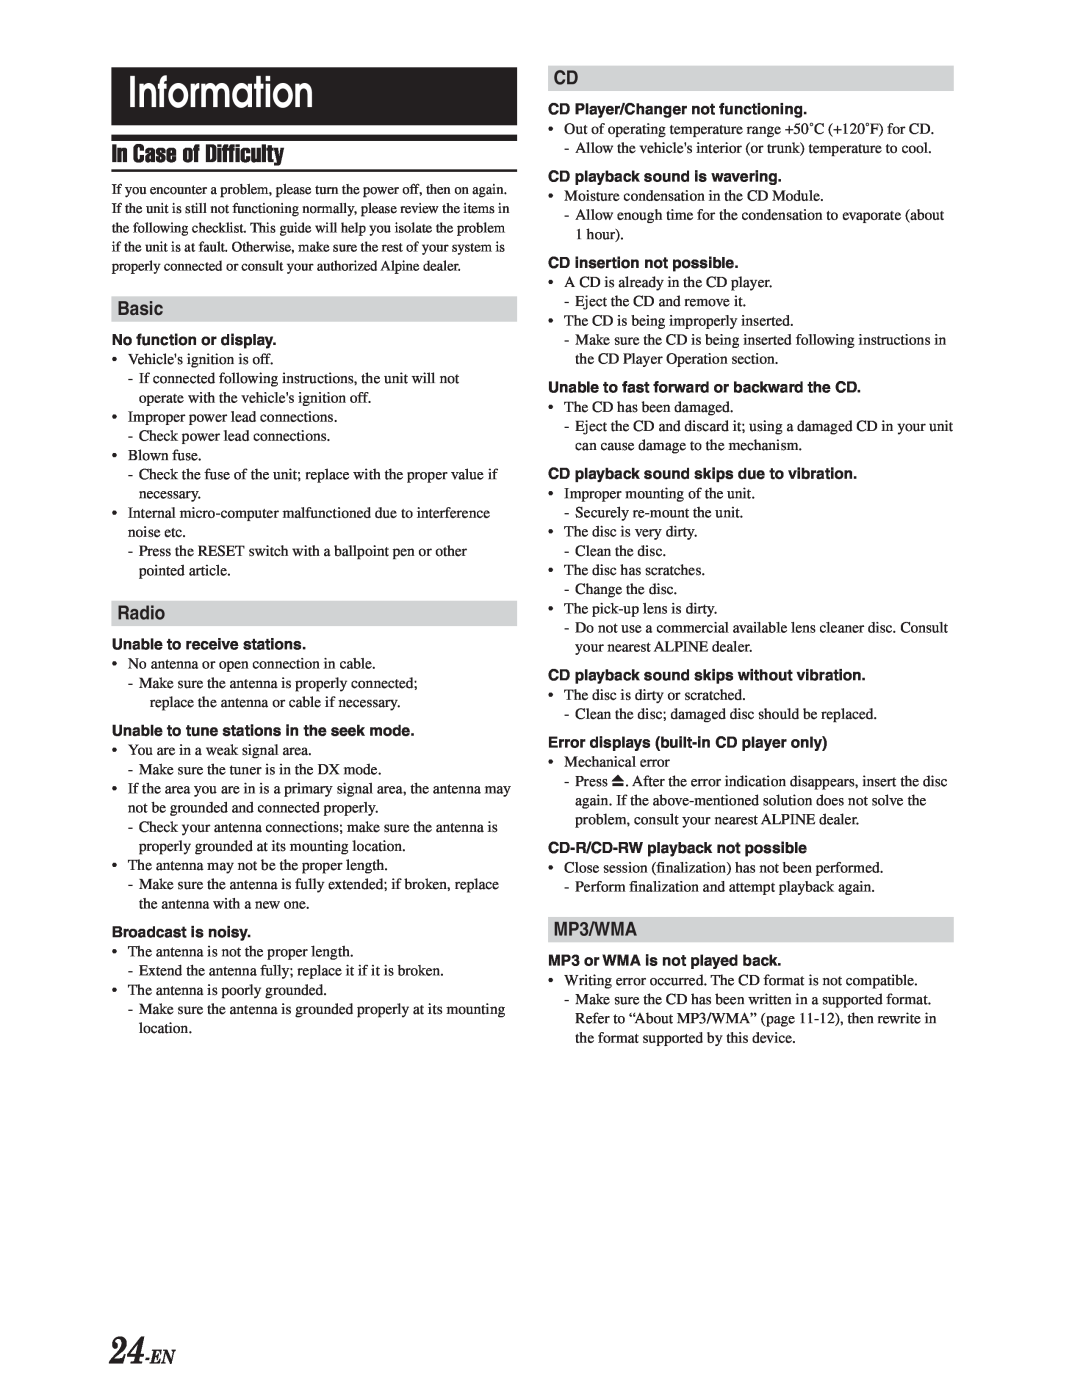 Alpine CDA-9847 owner manual Information, In Case of Difficulty, Basic, Radio, 24-EN, MP3/WMA 